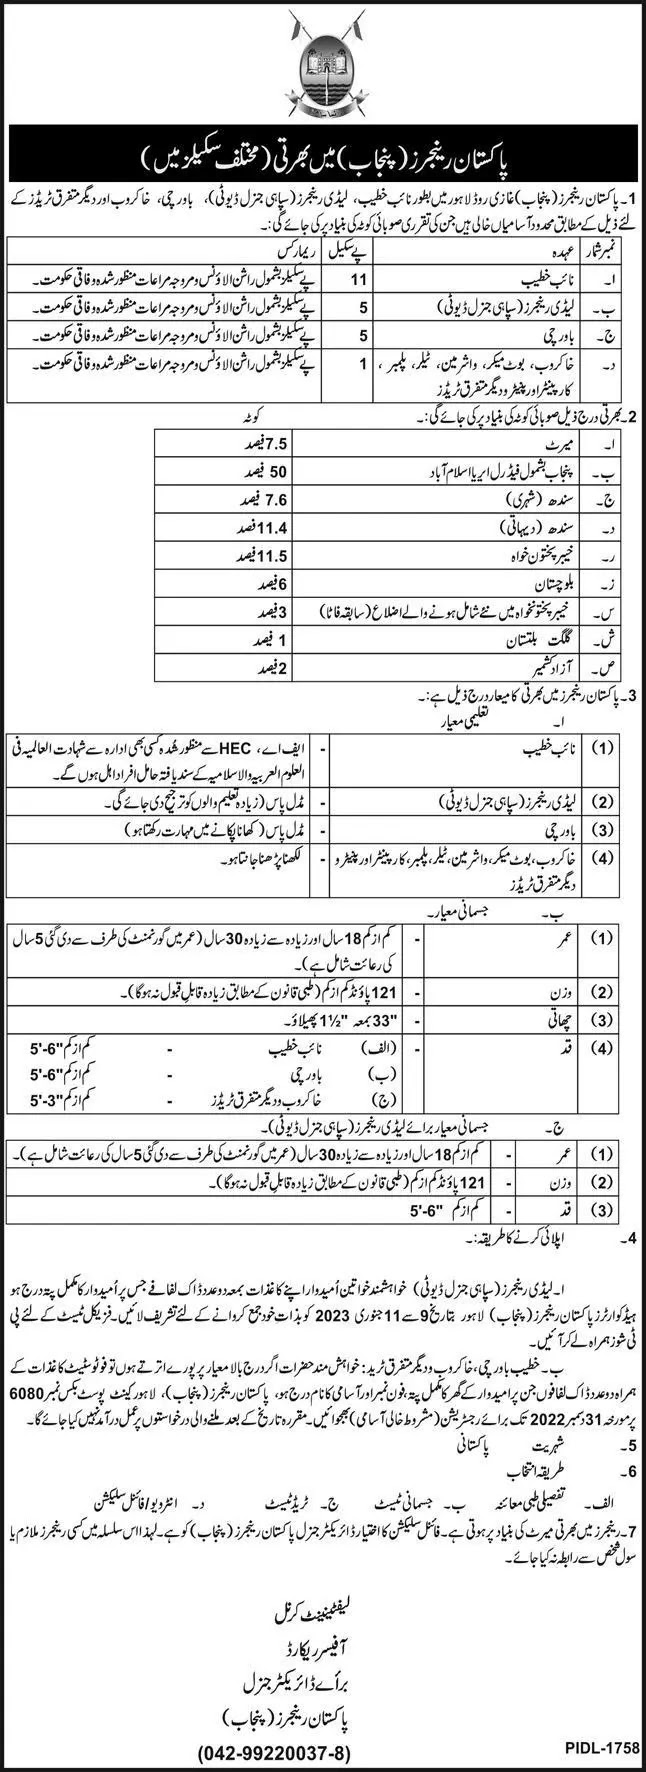 Pakistan Rangers Jobs 2023 - Punjab Rangers Jobs 2023 - pakistanrangers.punjab.gov.pk Jobs 2023